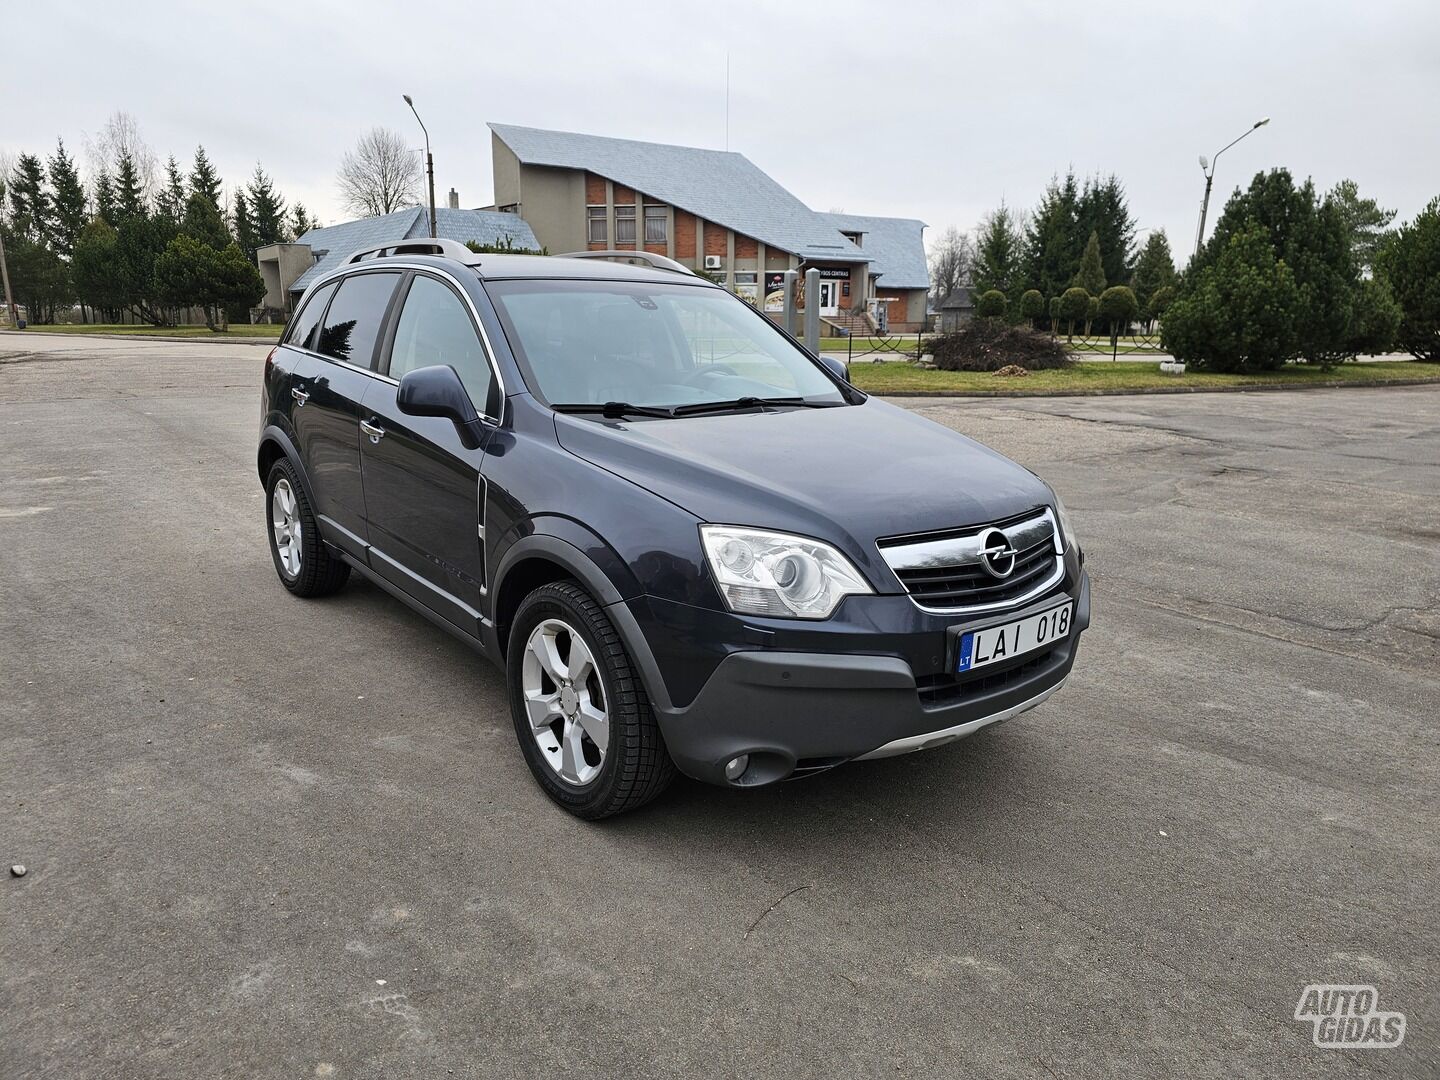 Opel Antara 2007 y SUV